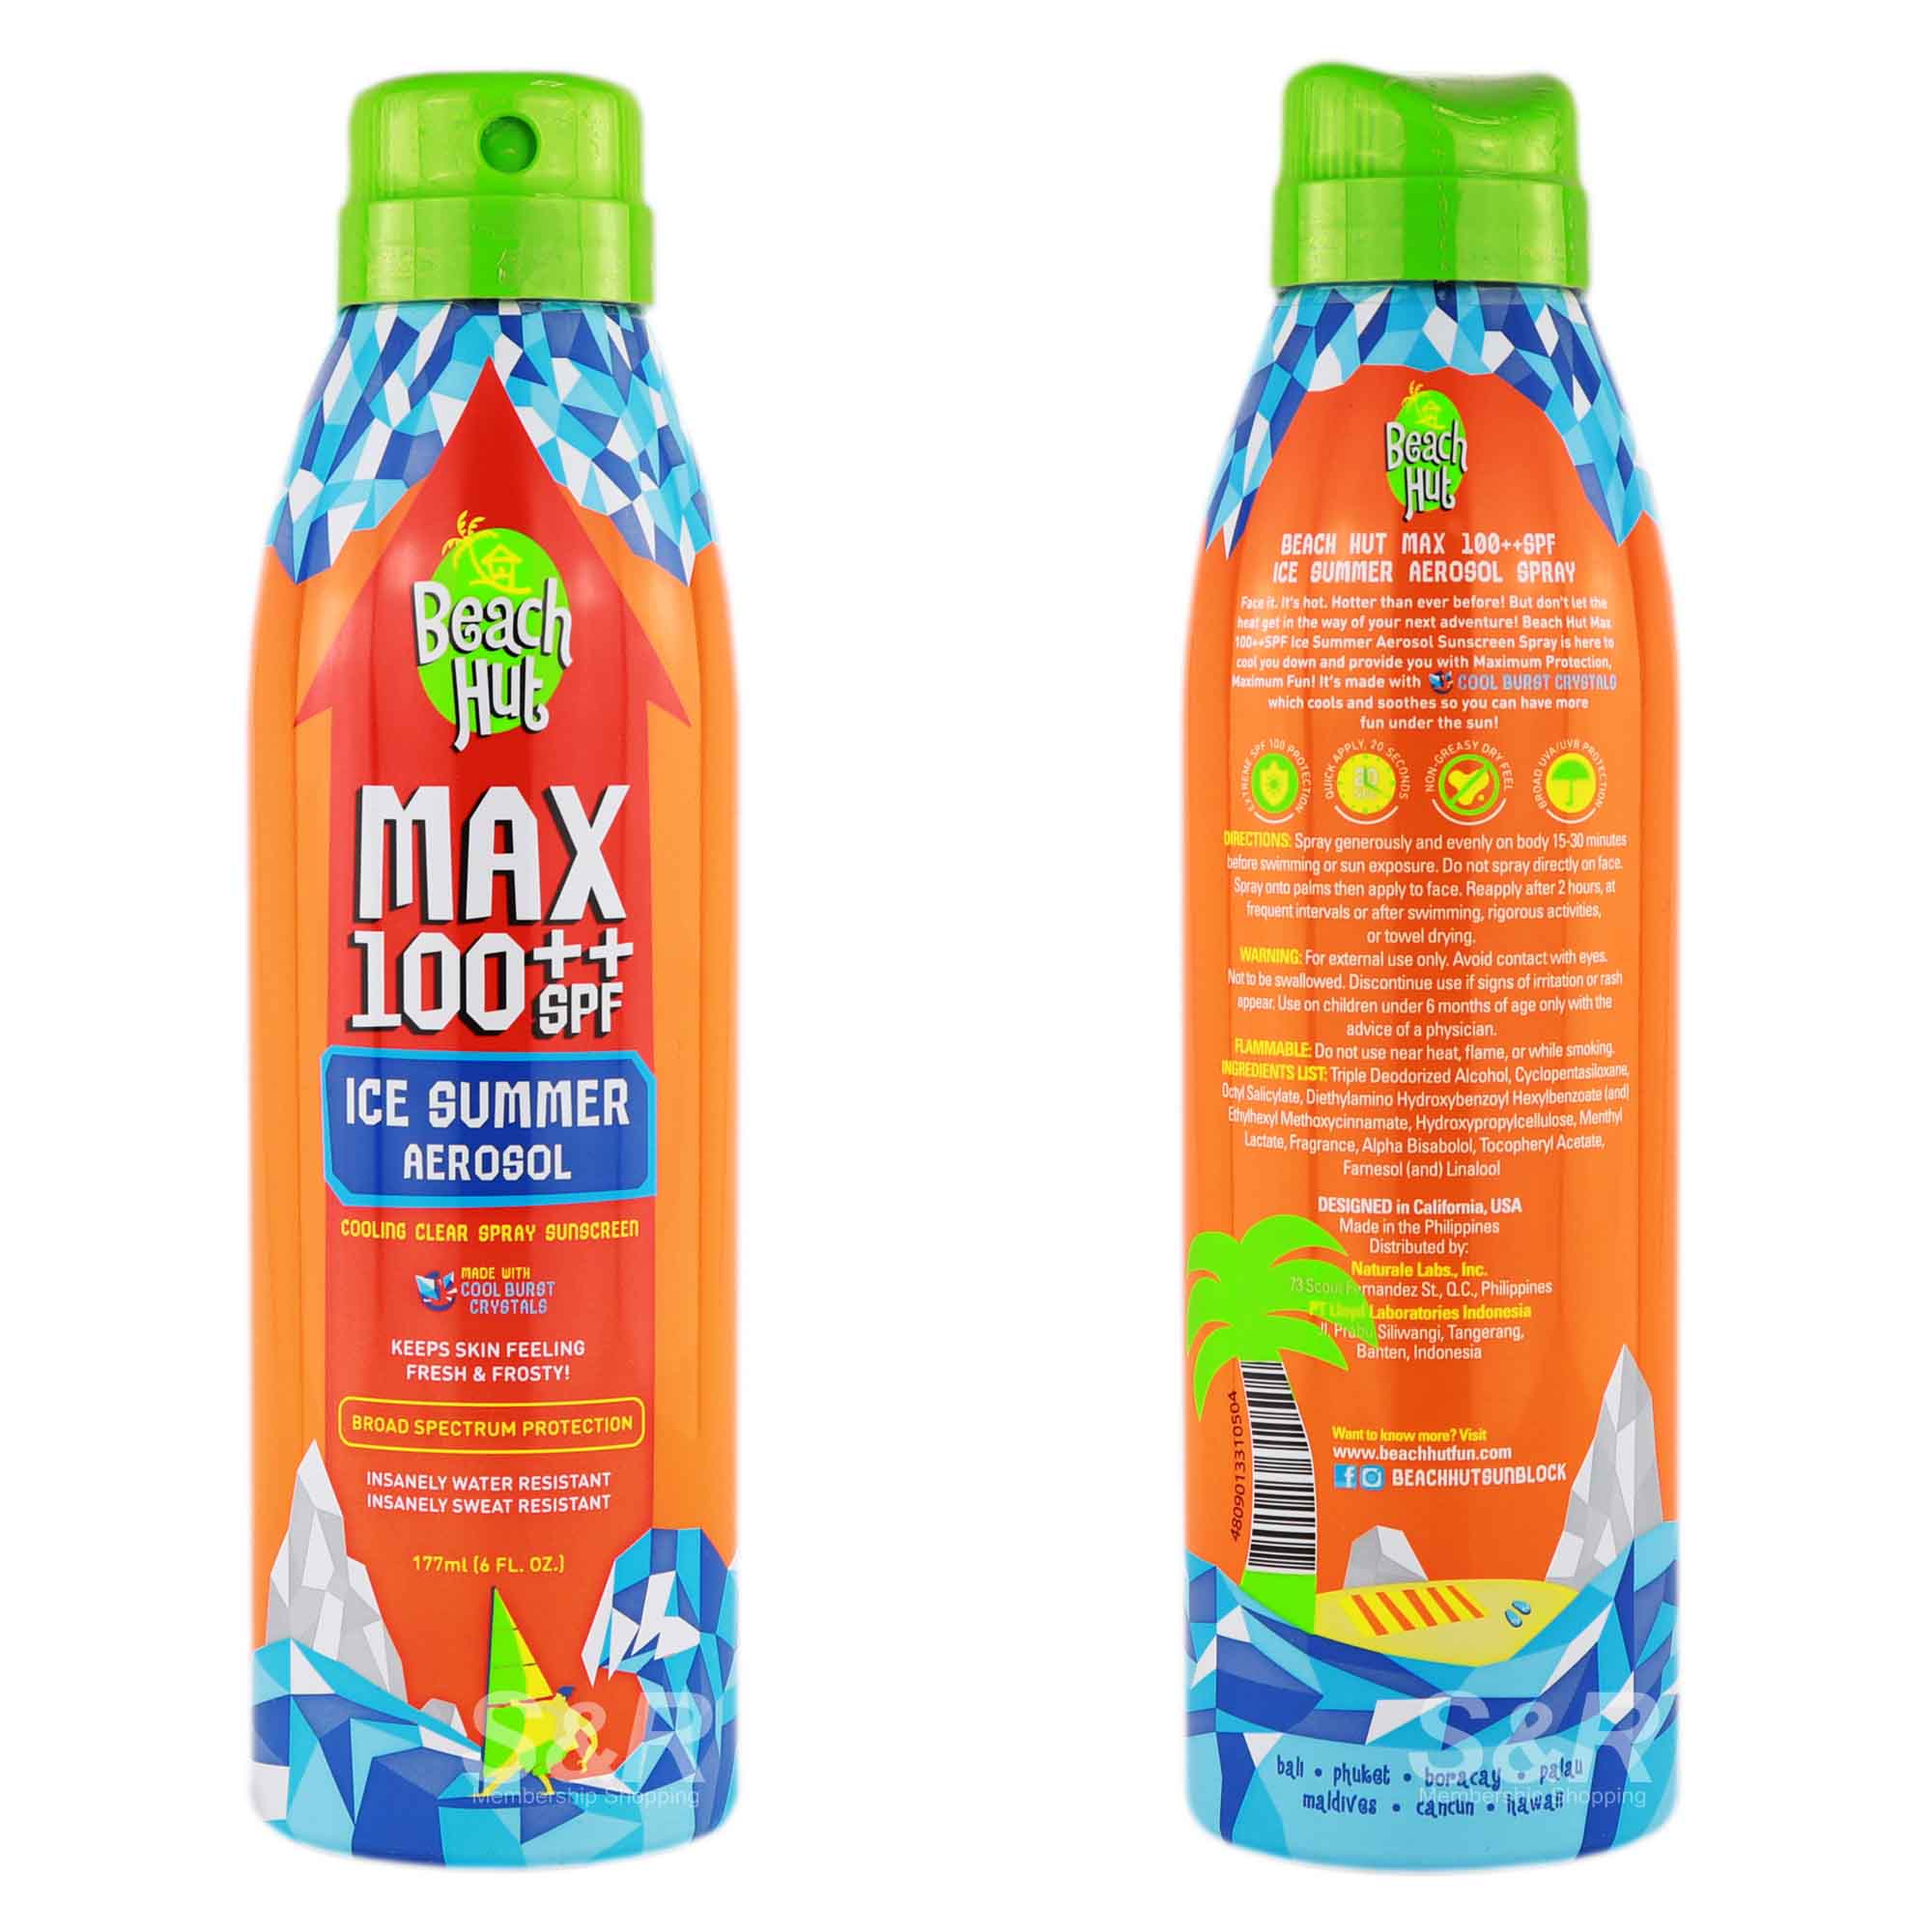 Max 100++ SPF Ice Summer